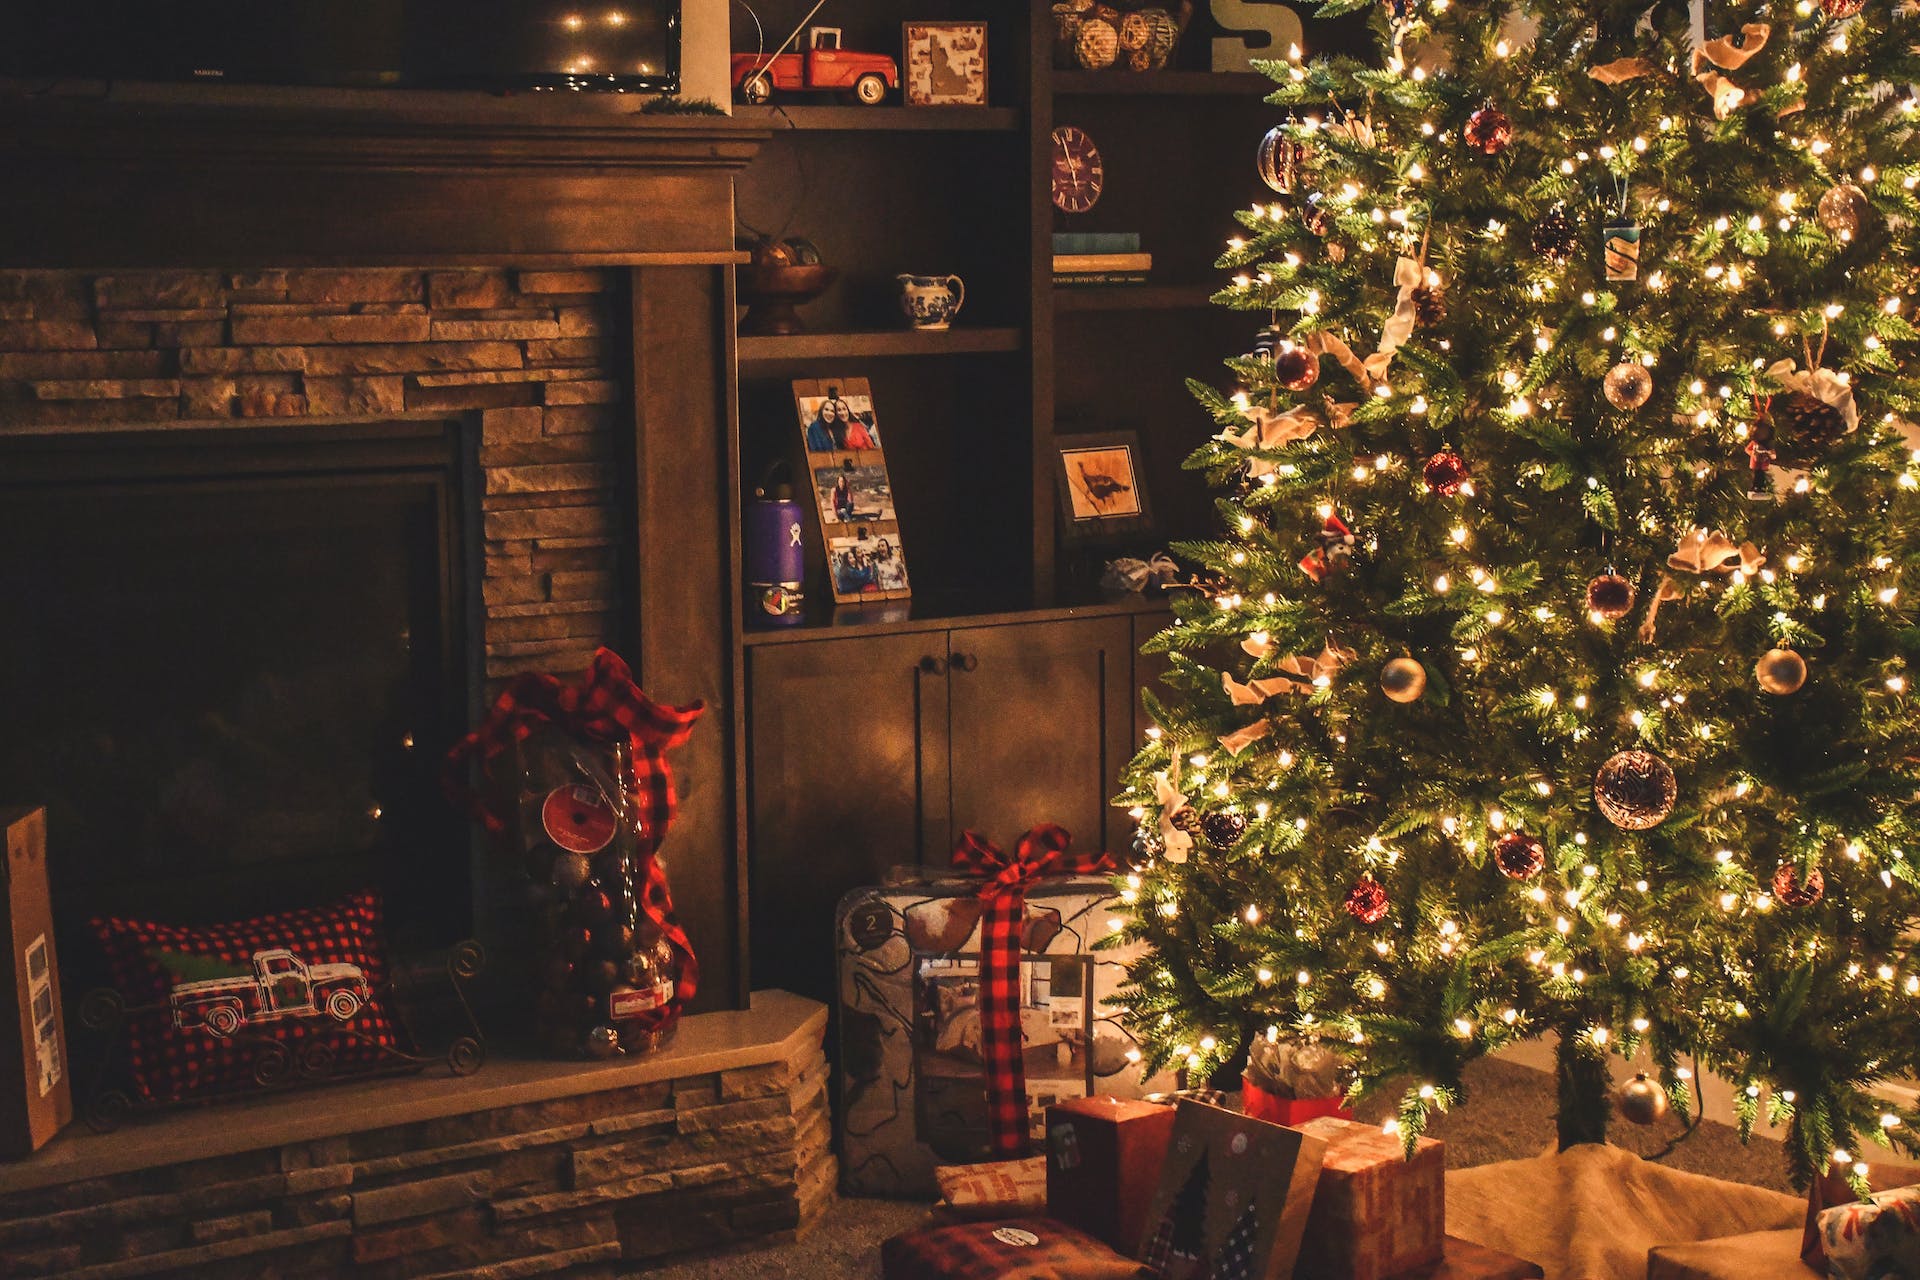 Illuminated Christmas tree in the living room